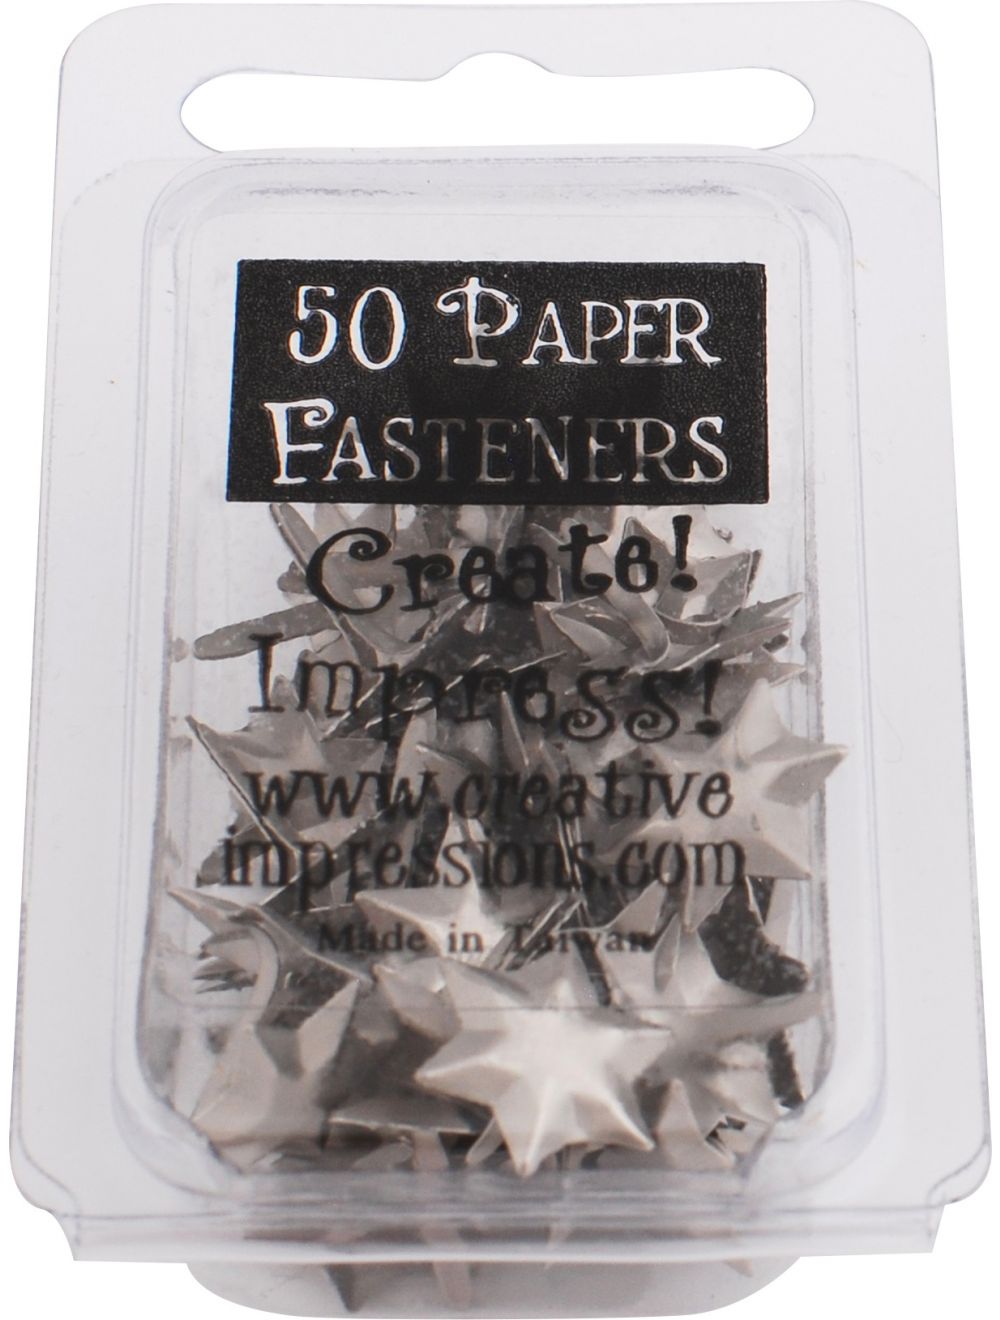 Paper Fasteners 